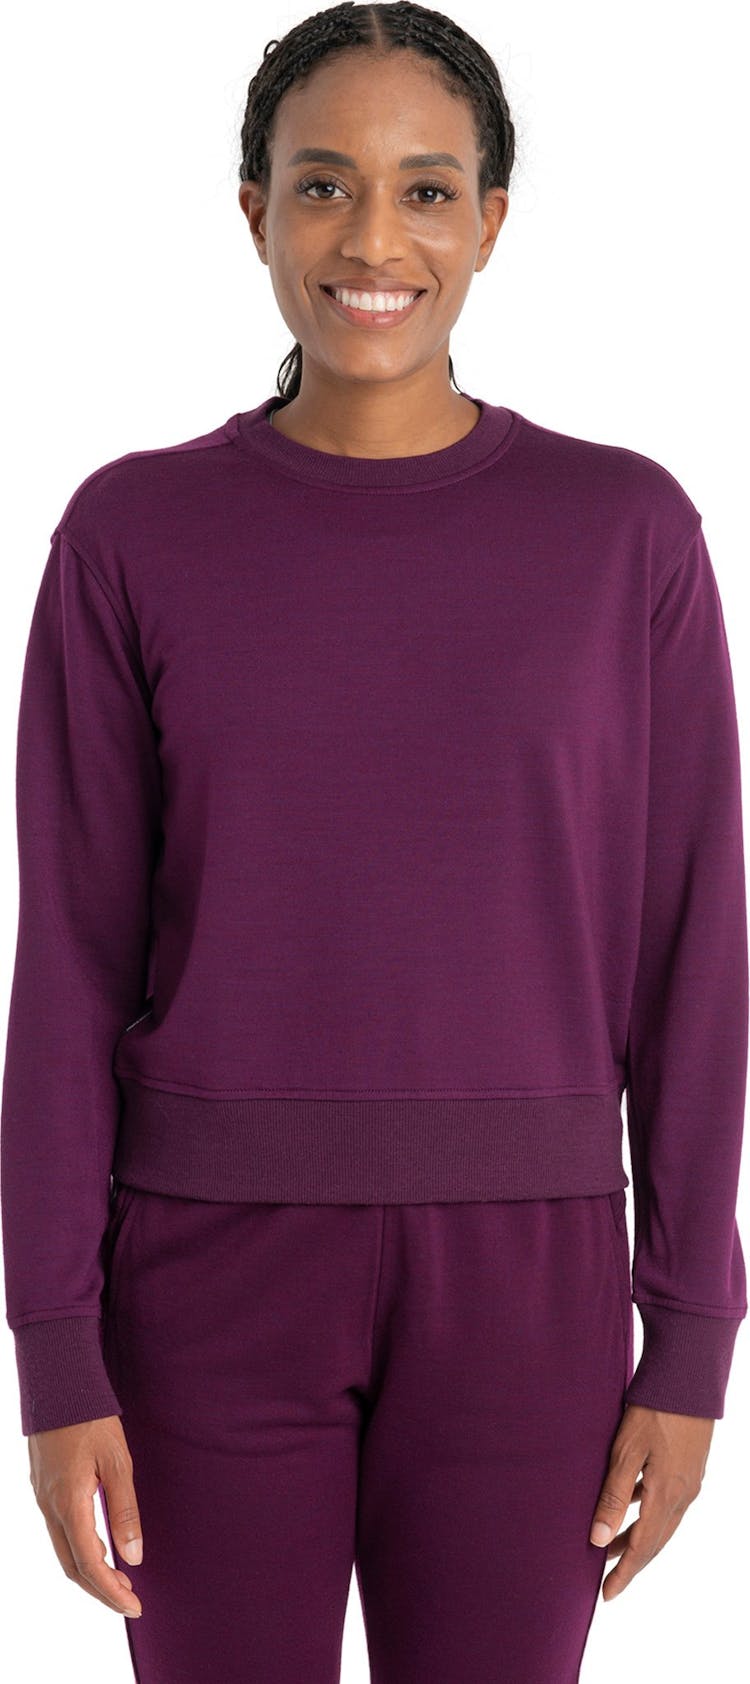 Product gallery image number 7 for product Crush II Merino Long Sleeve Sweatshirt - Women's